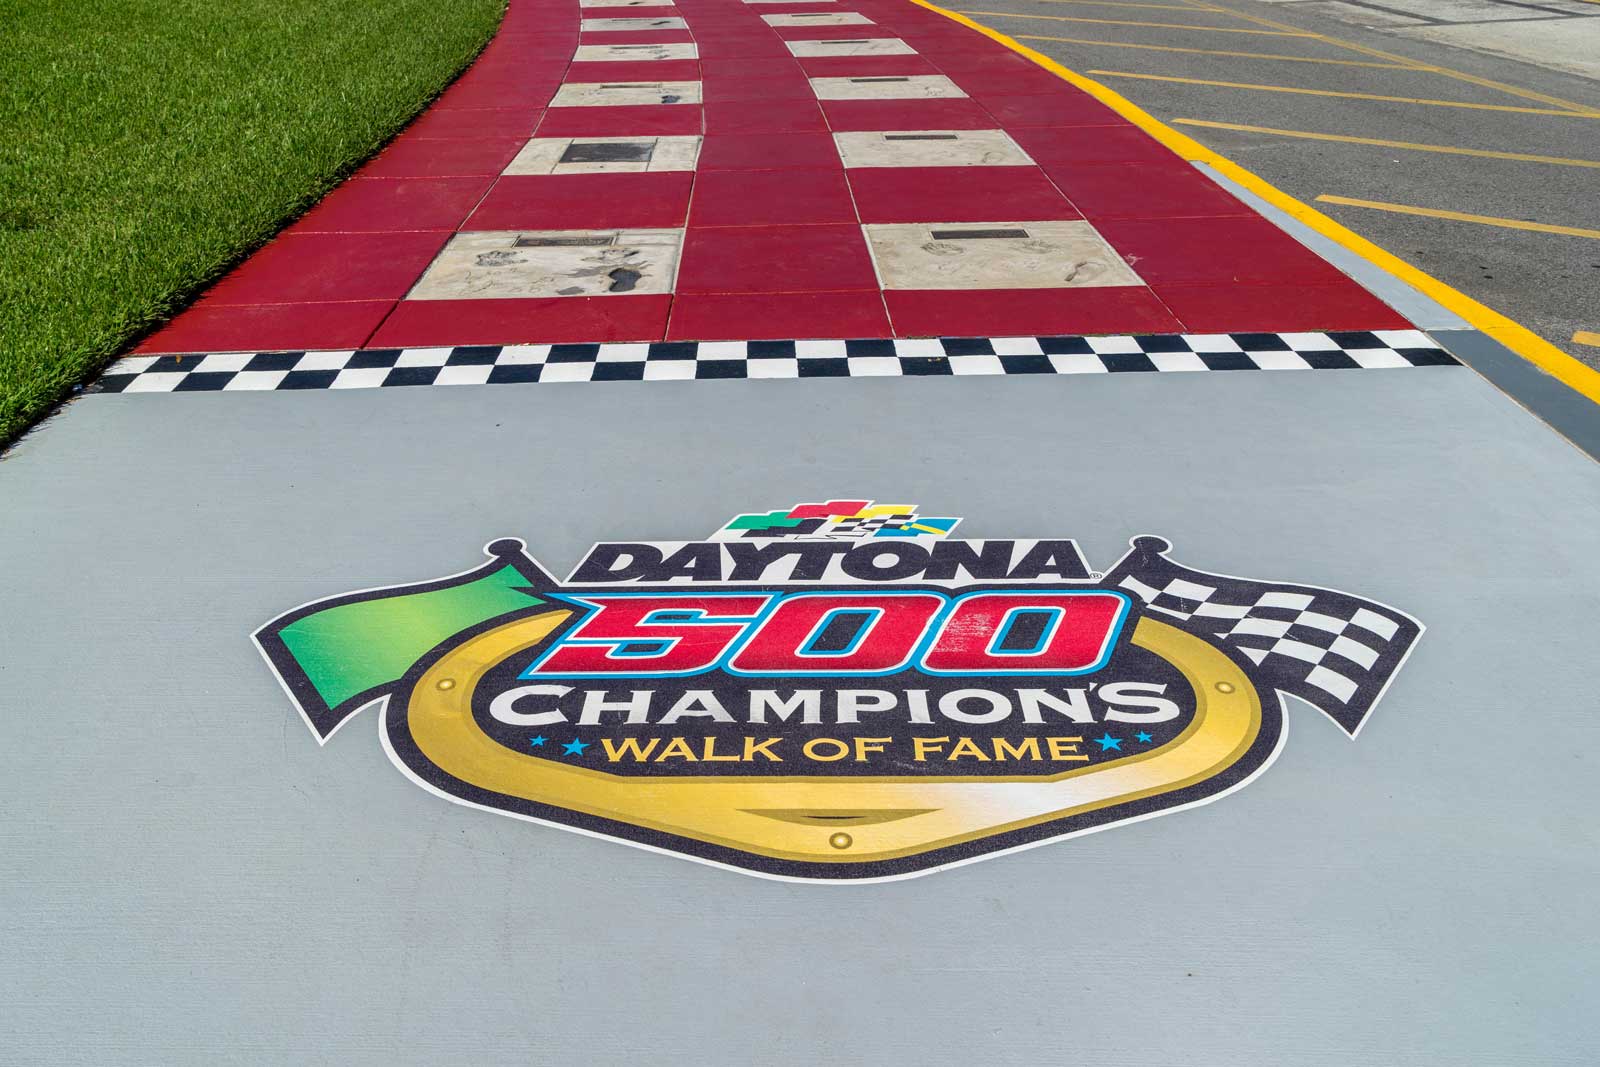 Daytona 500 walk of Champions